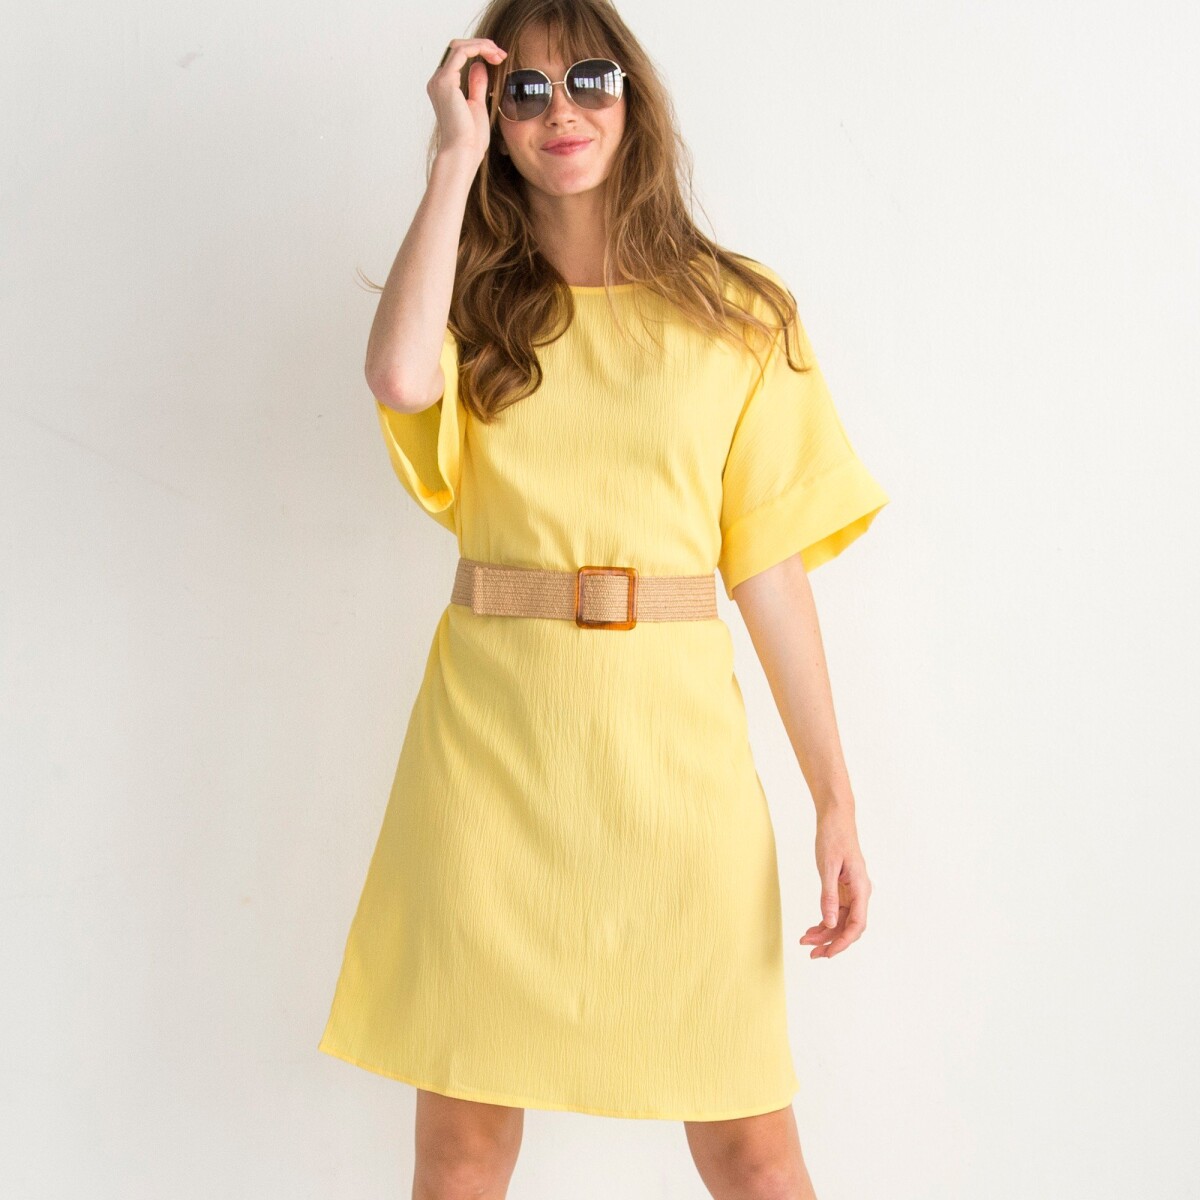 Blancheporte Rovné jednobarevné šaty se strukturou žlutá 3436